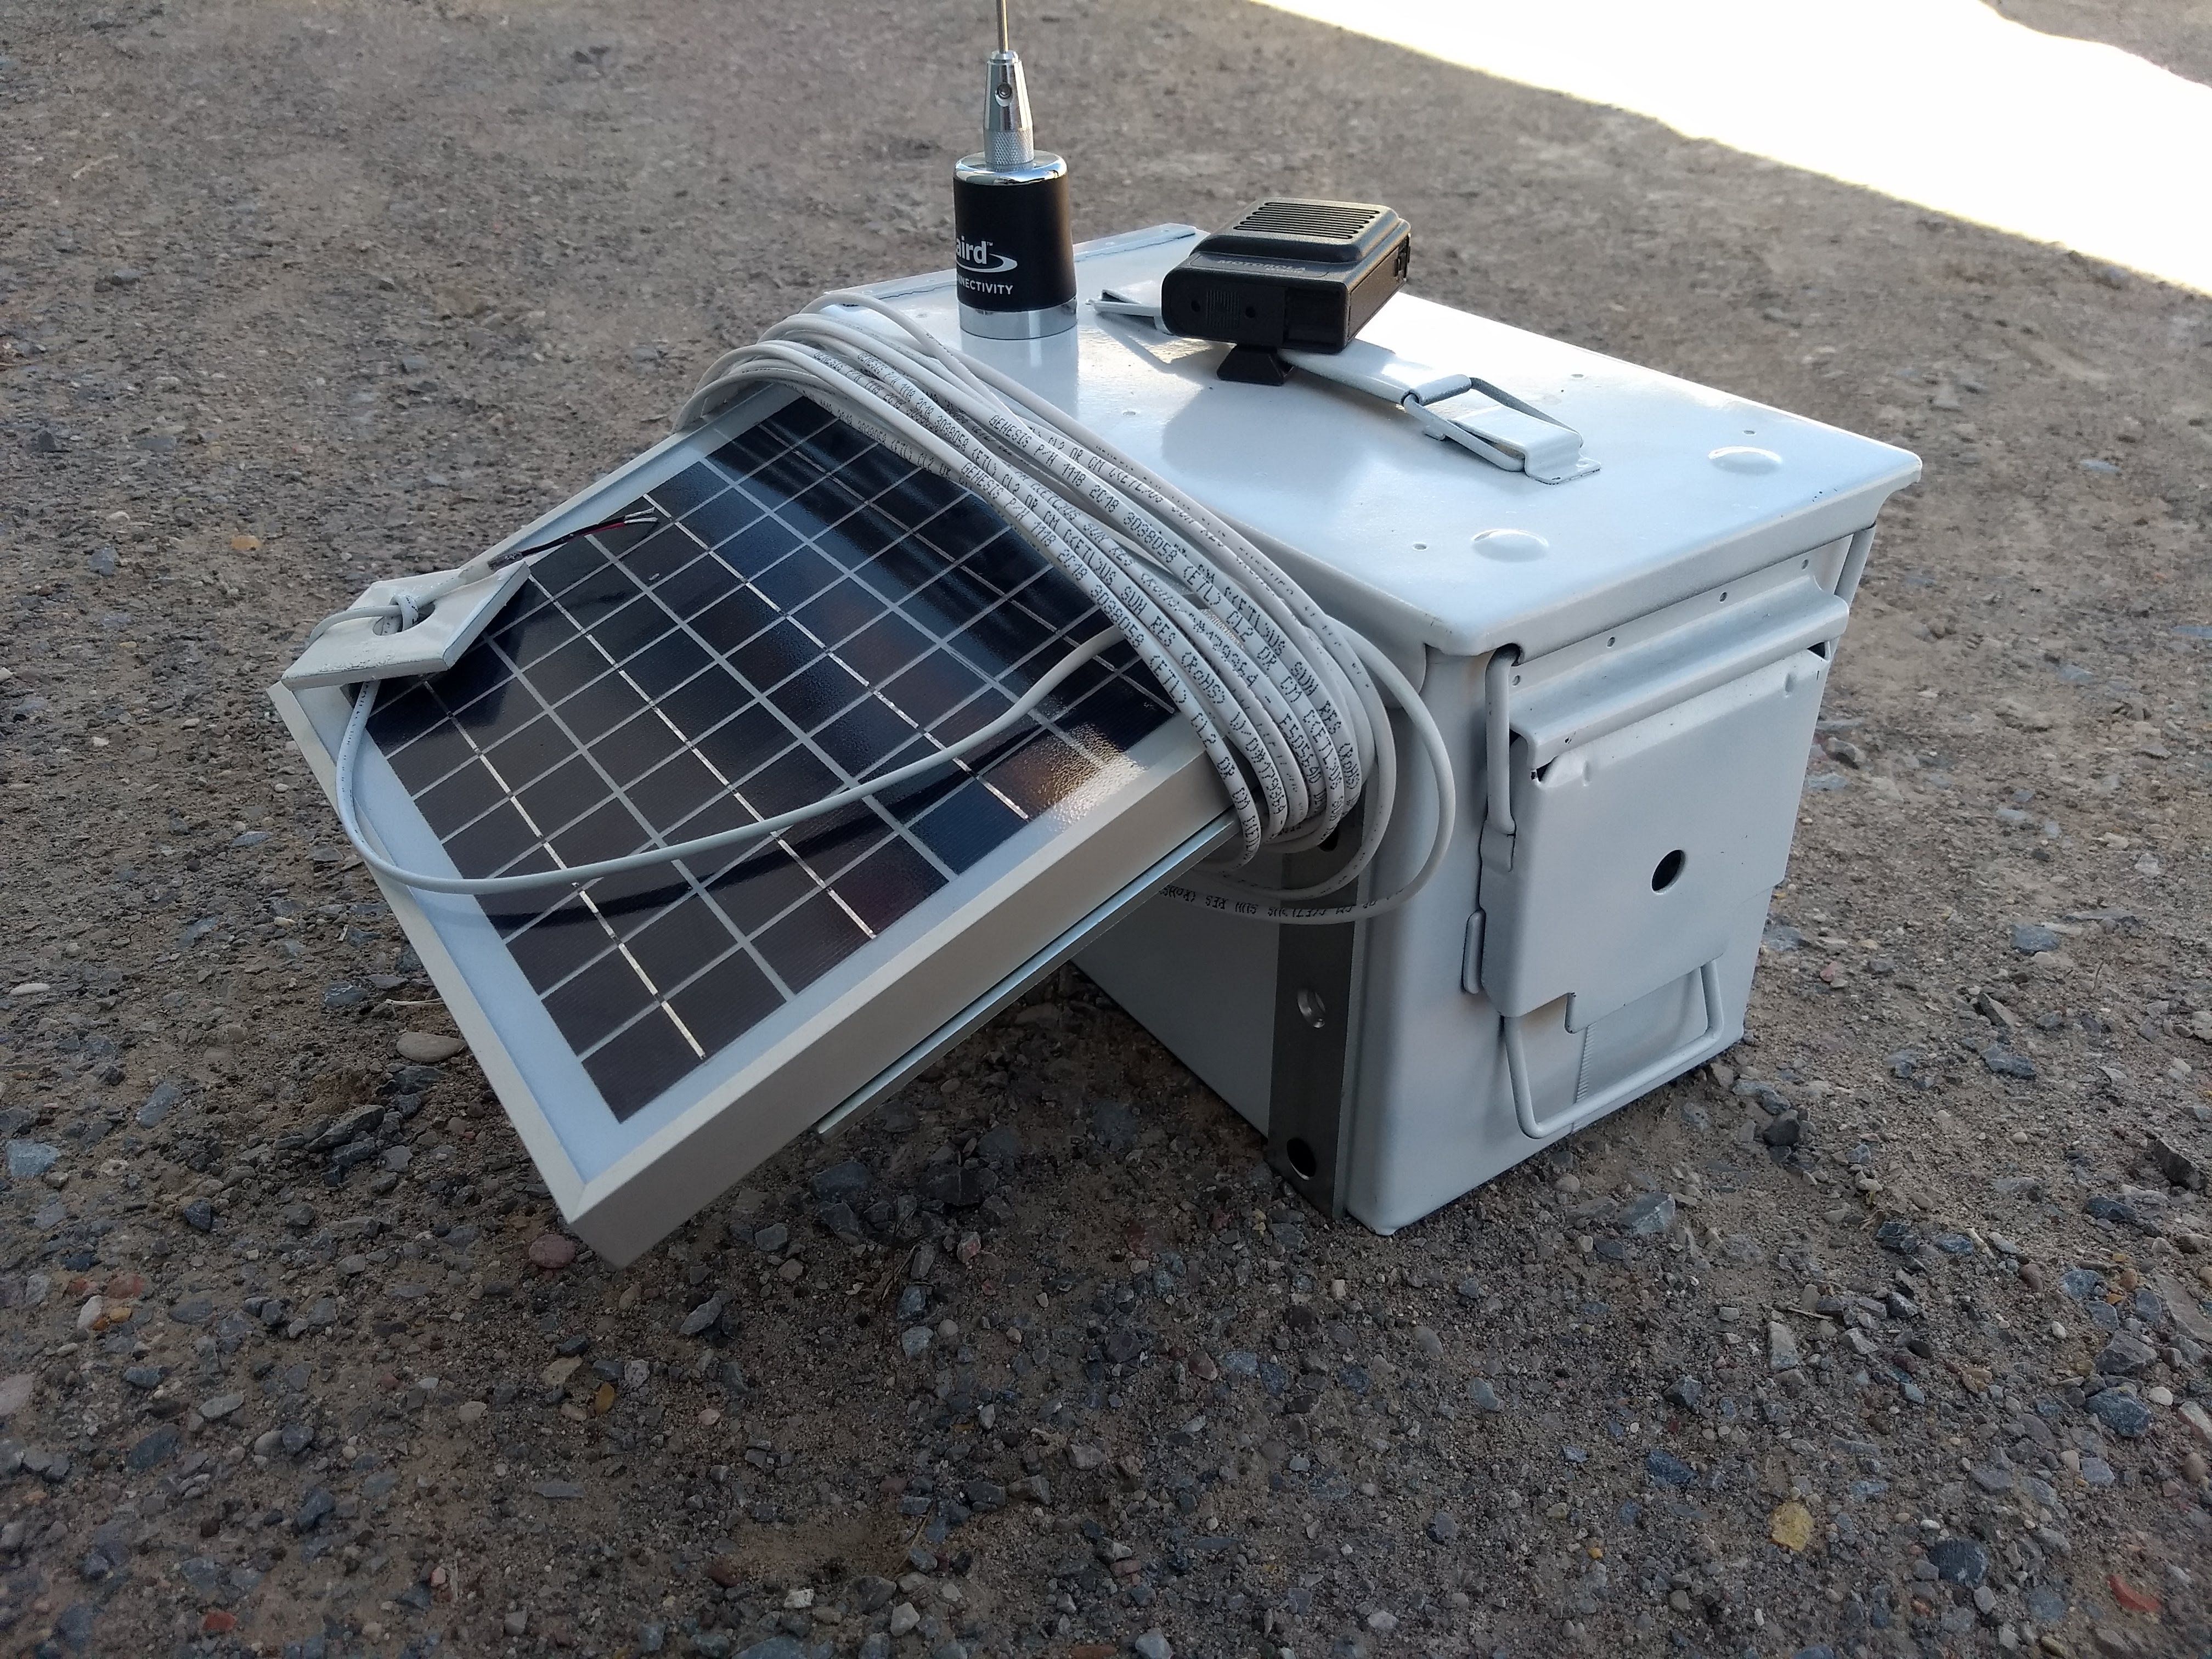 CBR solar-powered irrigation advance sensor system with radio pager